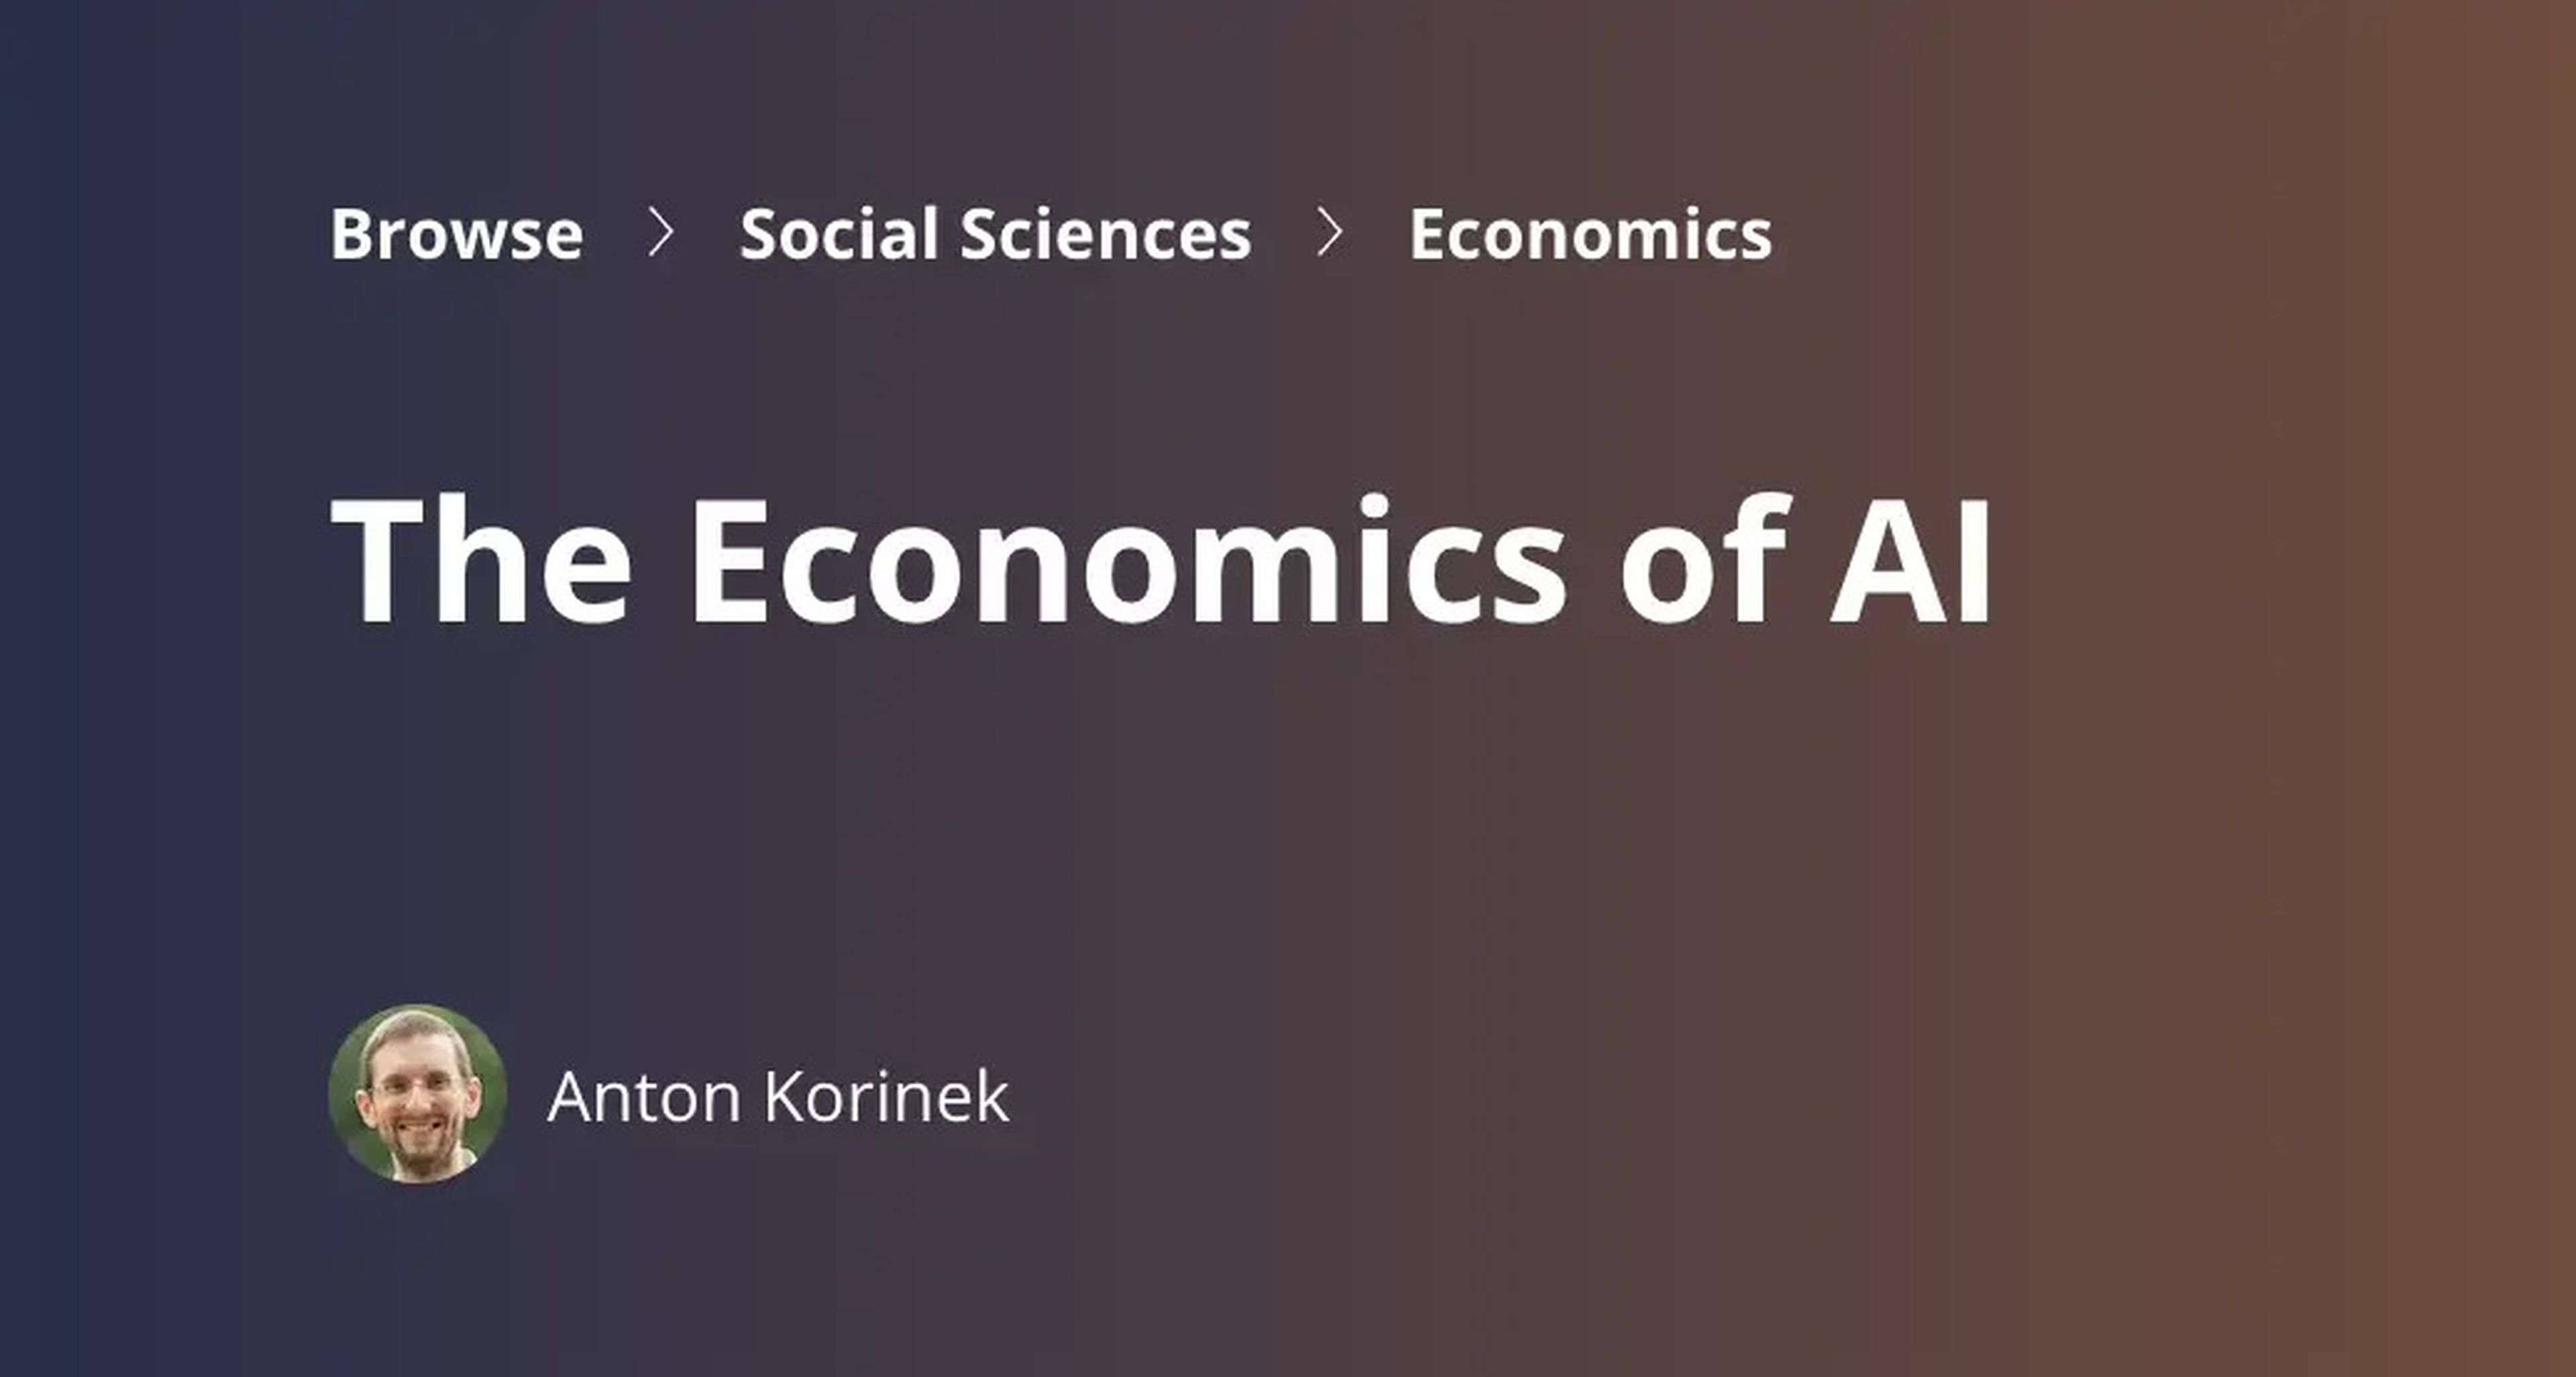 The Economics of AI Coursera course